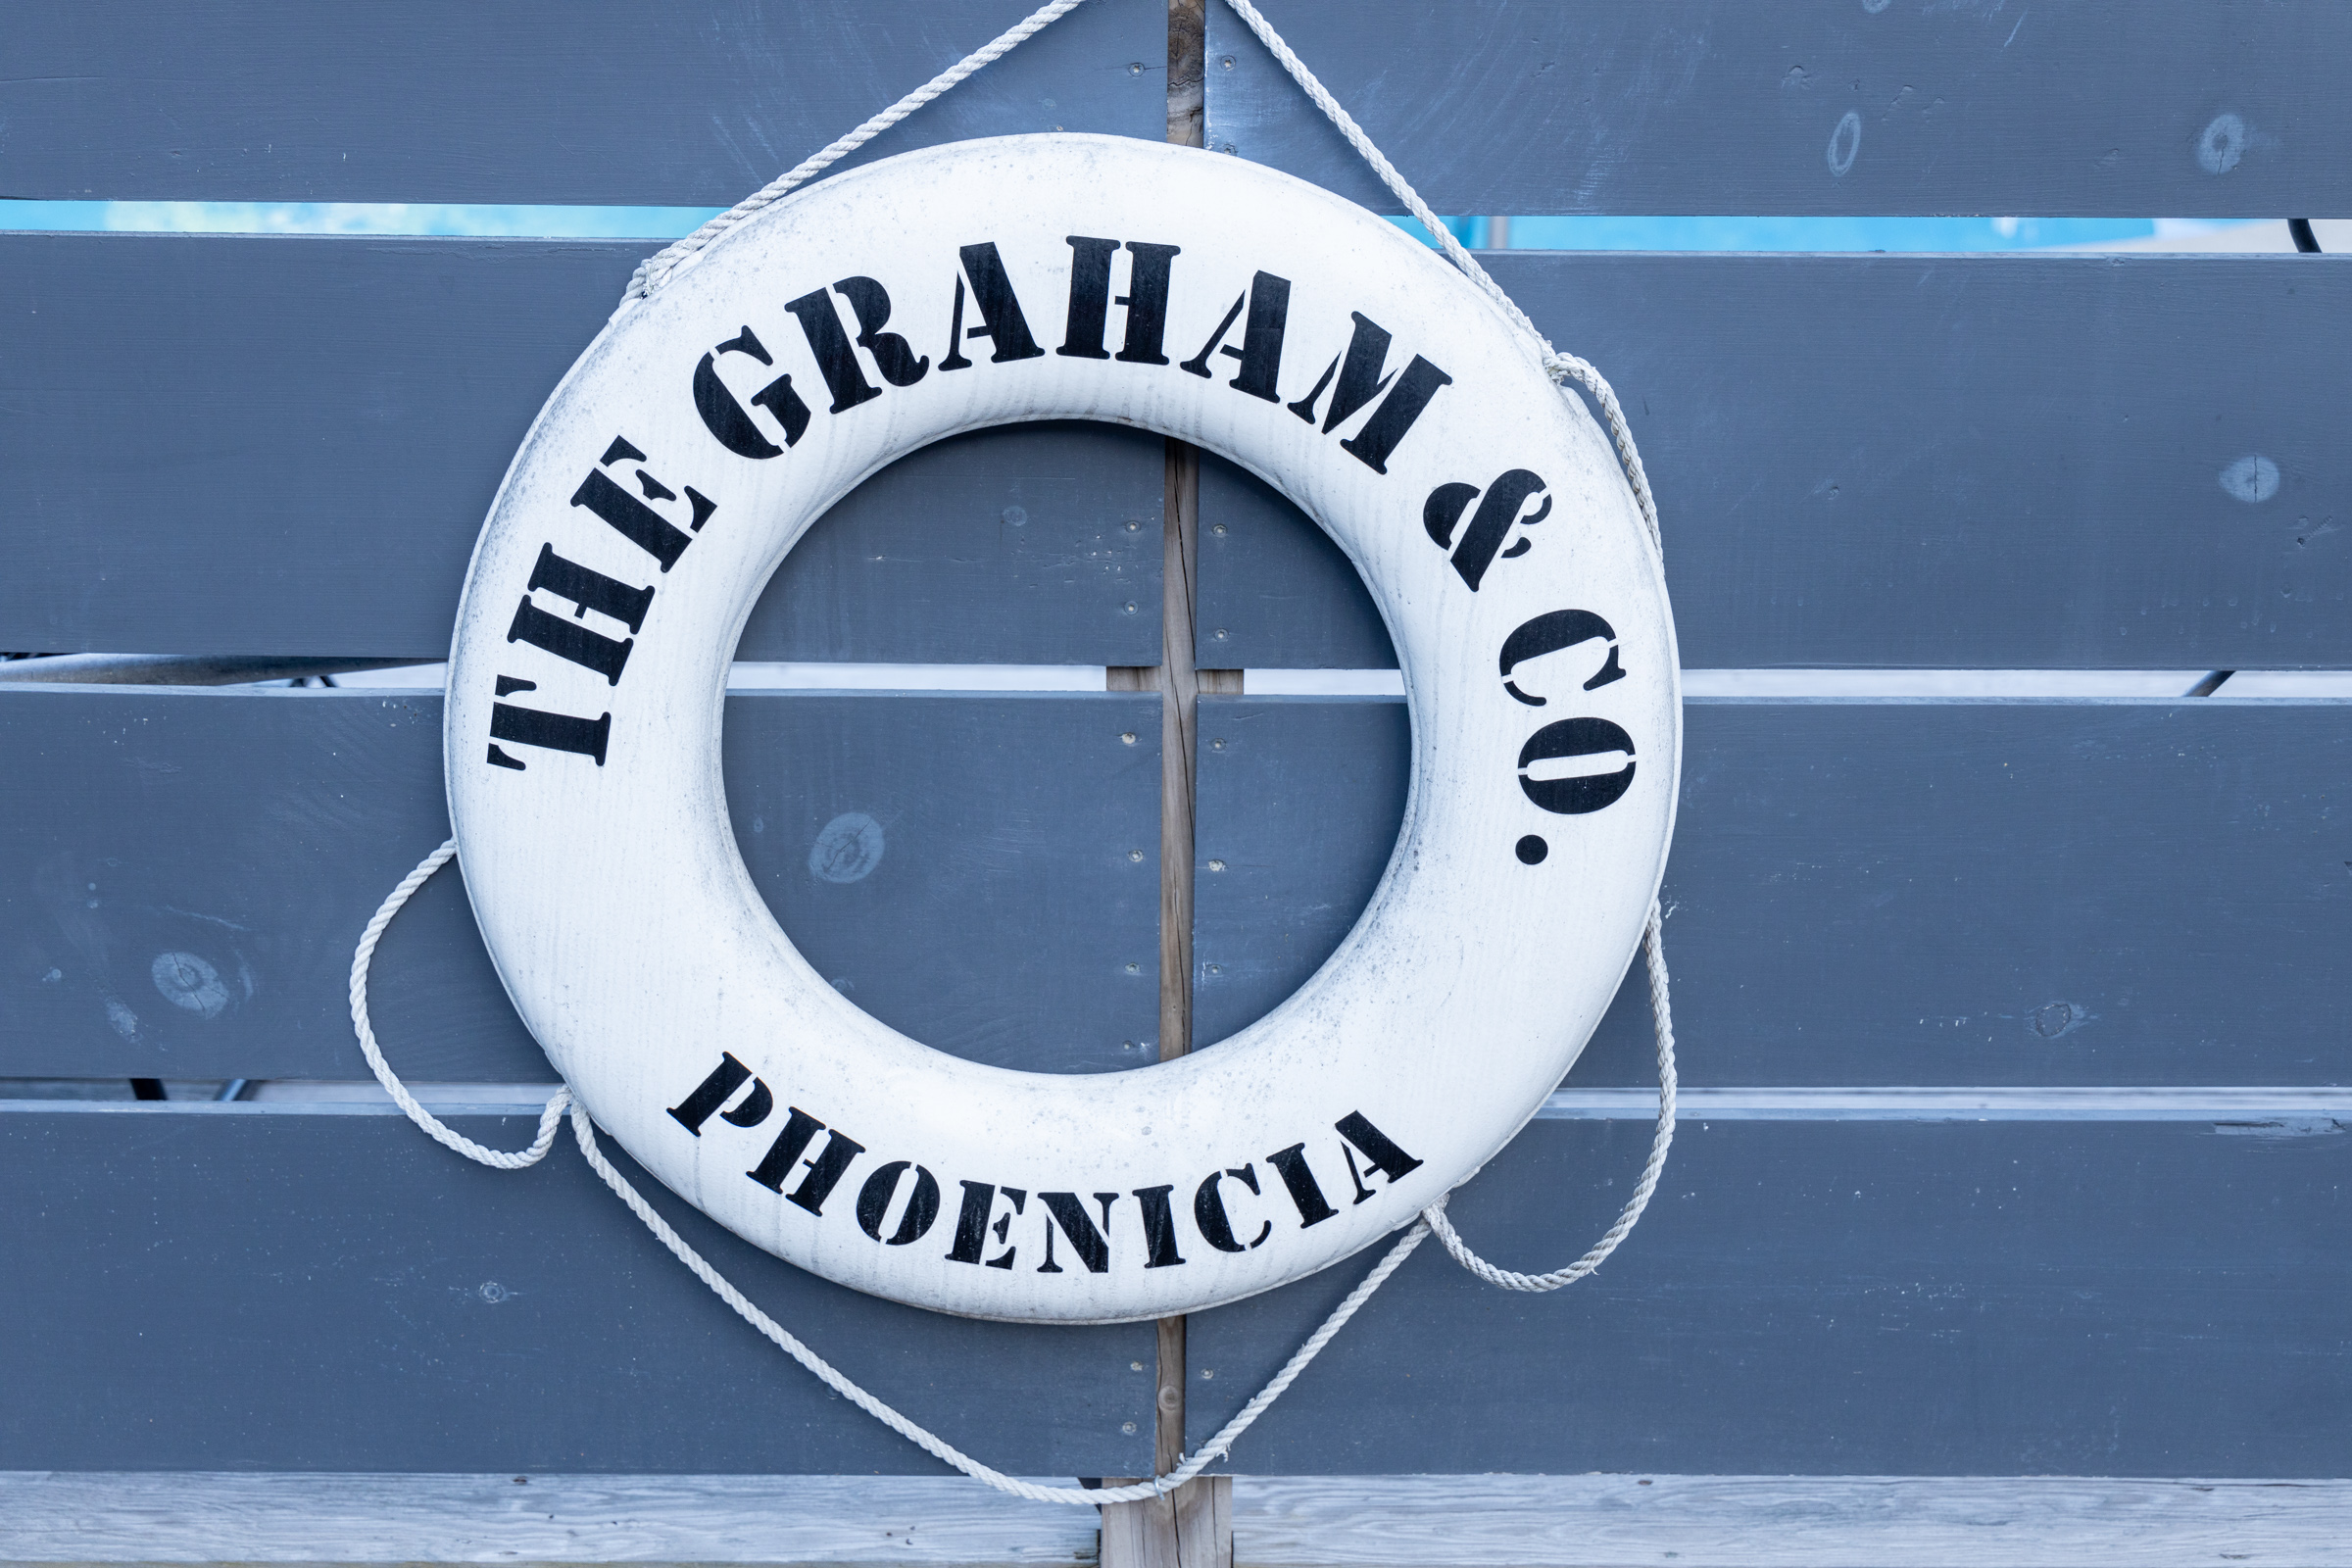 The Graham & Co Phoenicia New York